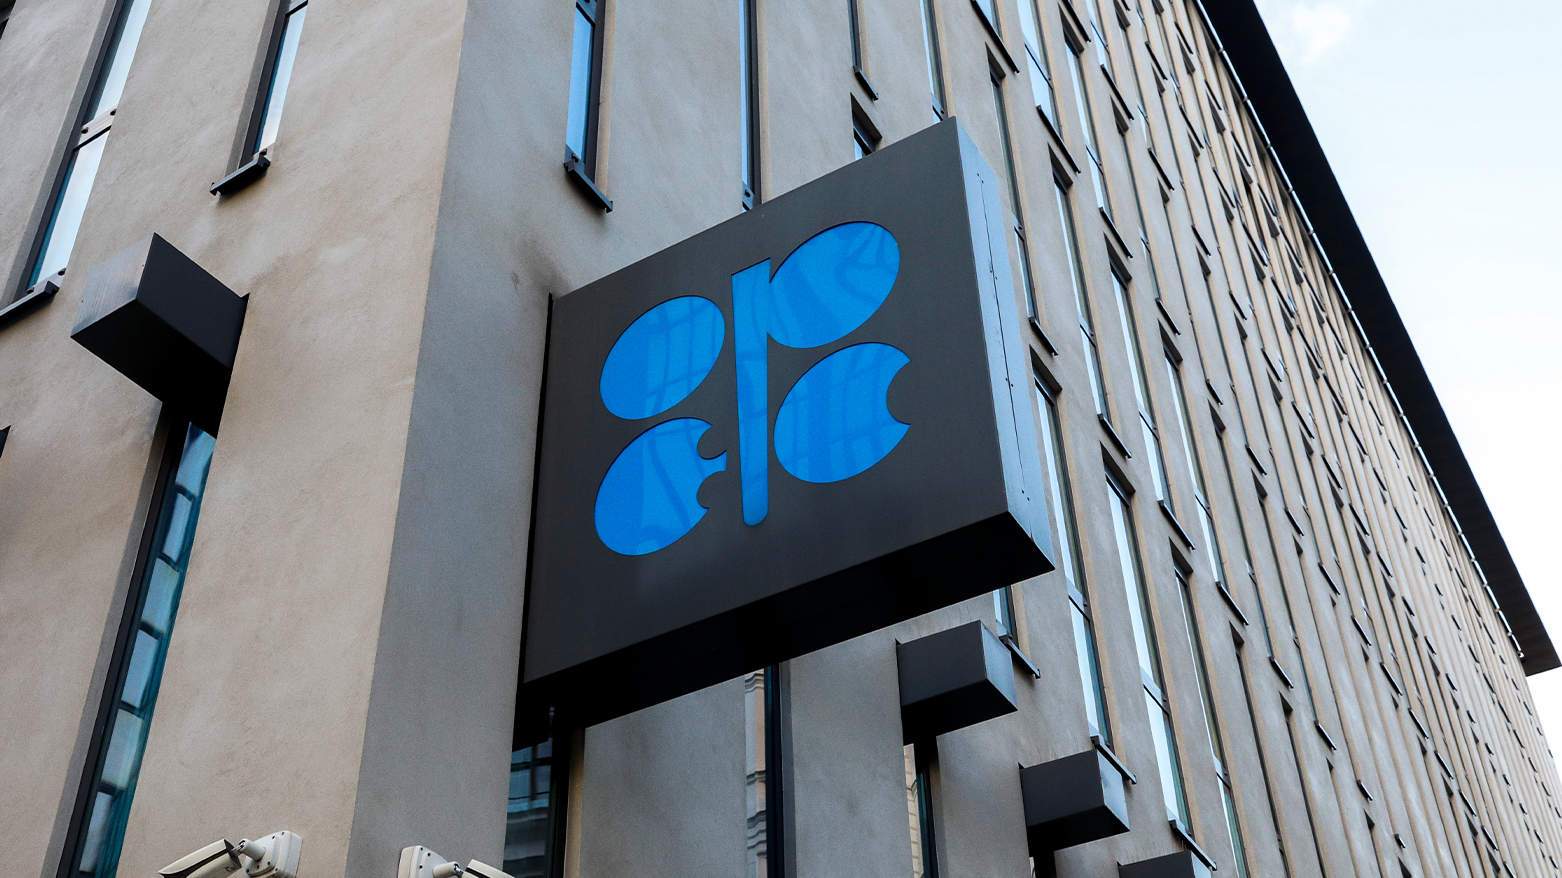 OPEC urges Iraq to resume Kurdistan Regions oil exports amid economic concerns